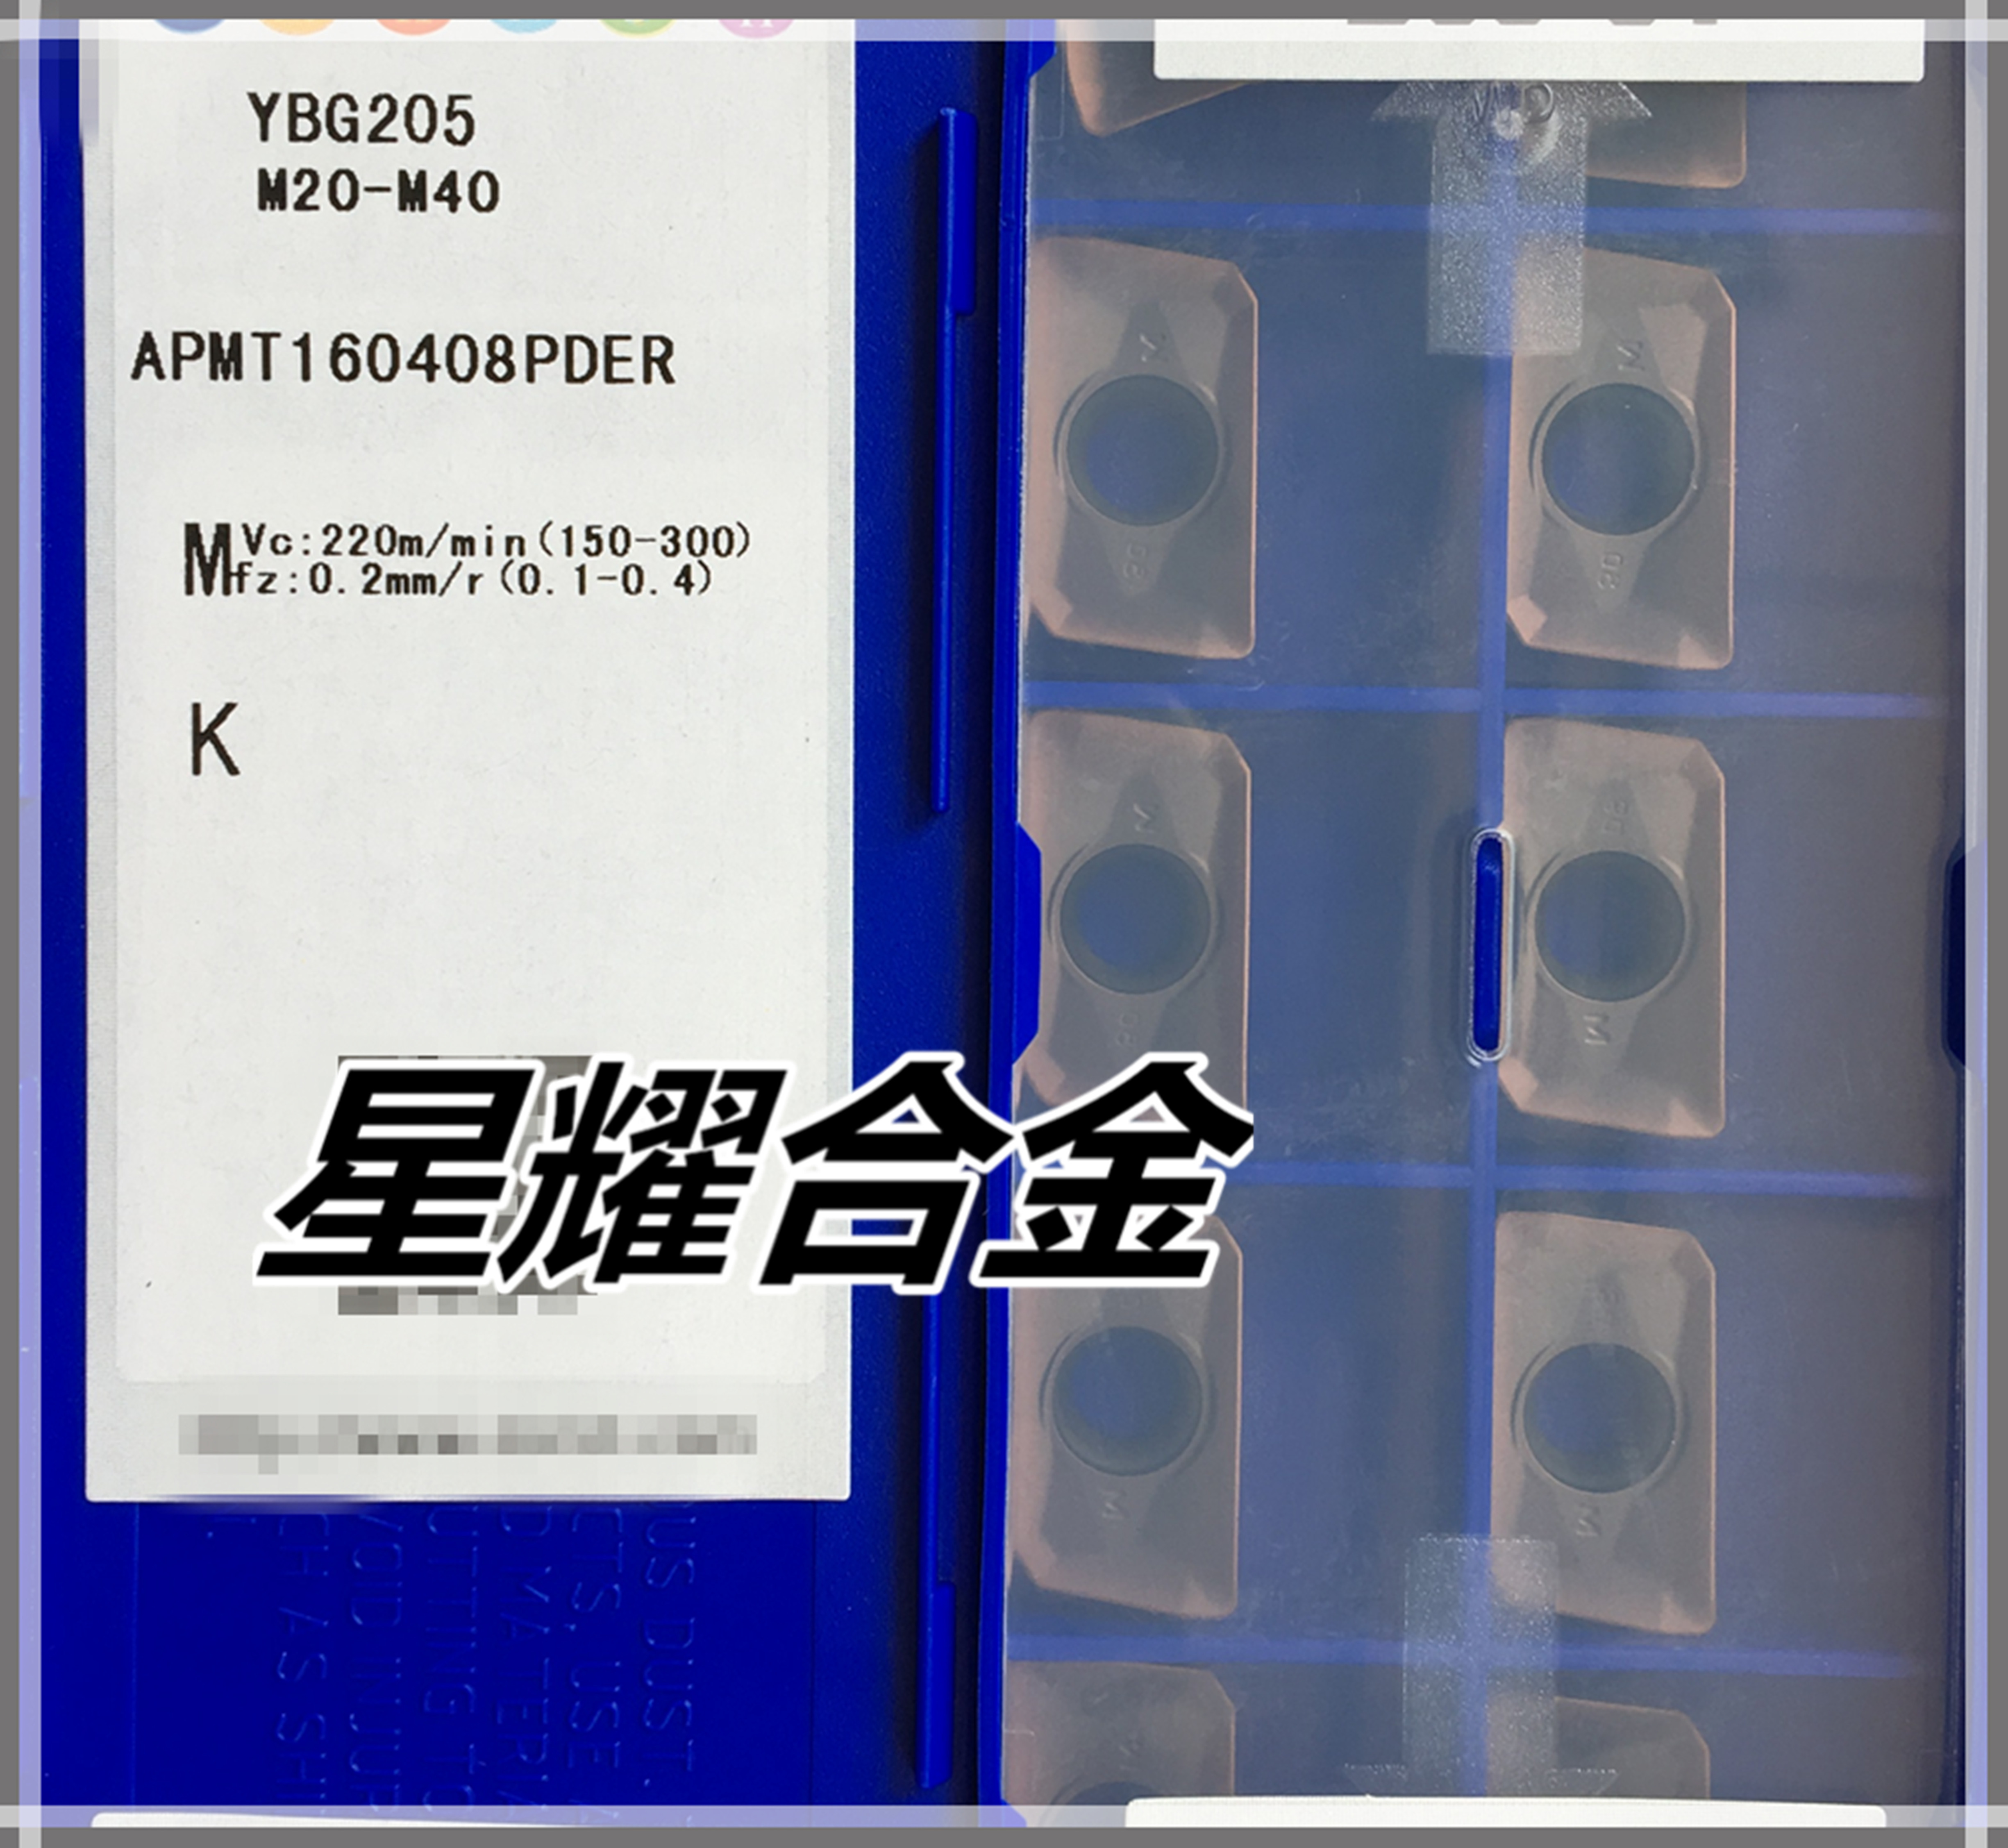 Zhuzhou CNC milling blade YBG205 APMT1135PDR APMT160408PDER